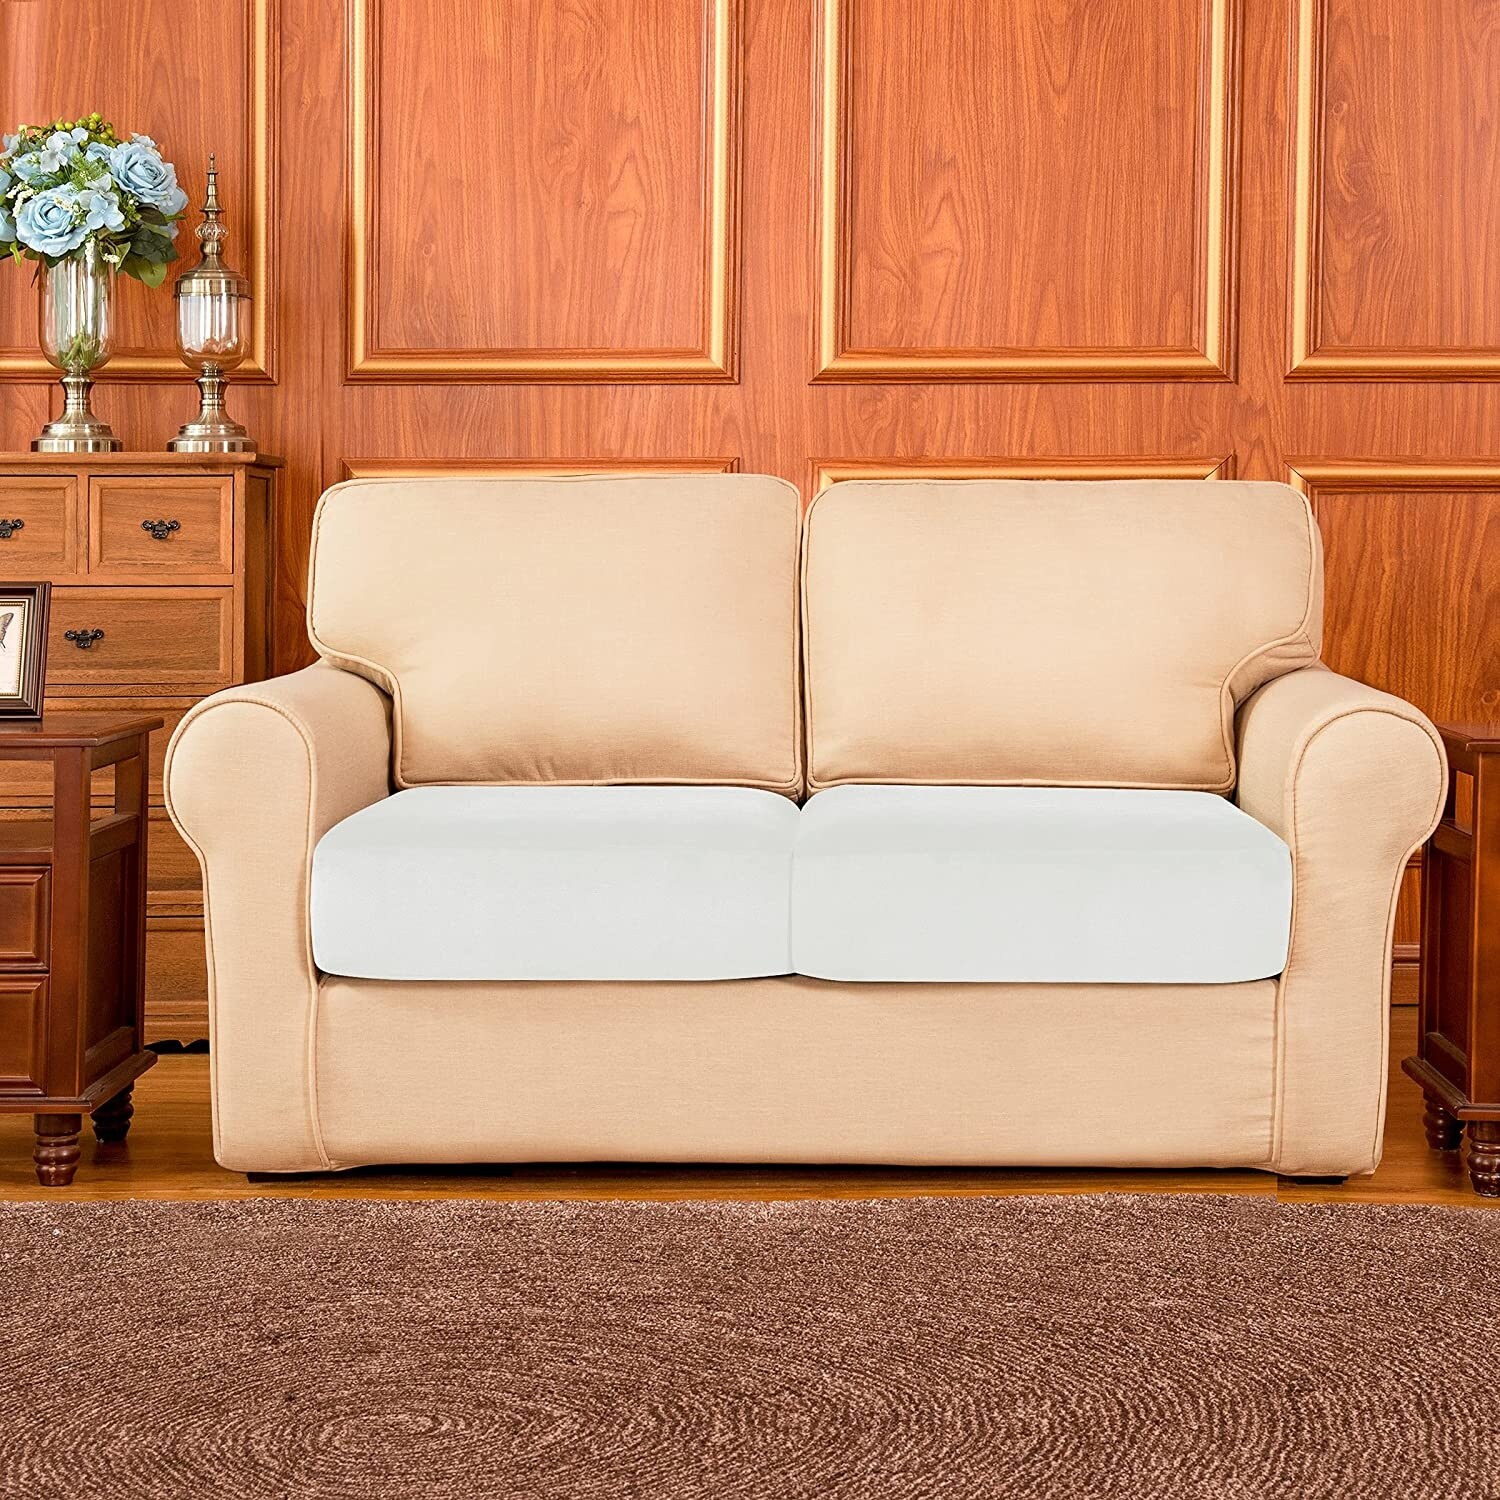 Subrtex Stretchy 1-piece PU Leather Seat Cushion Covers, XL-Sofa